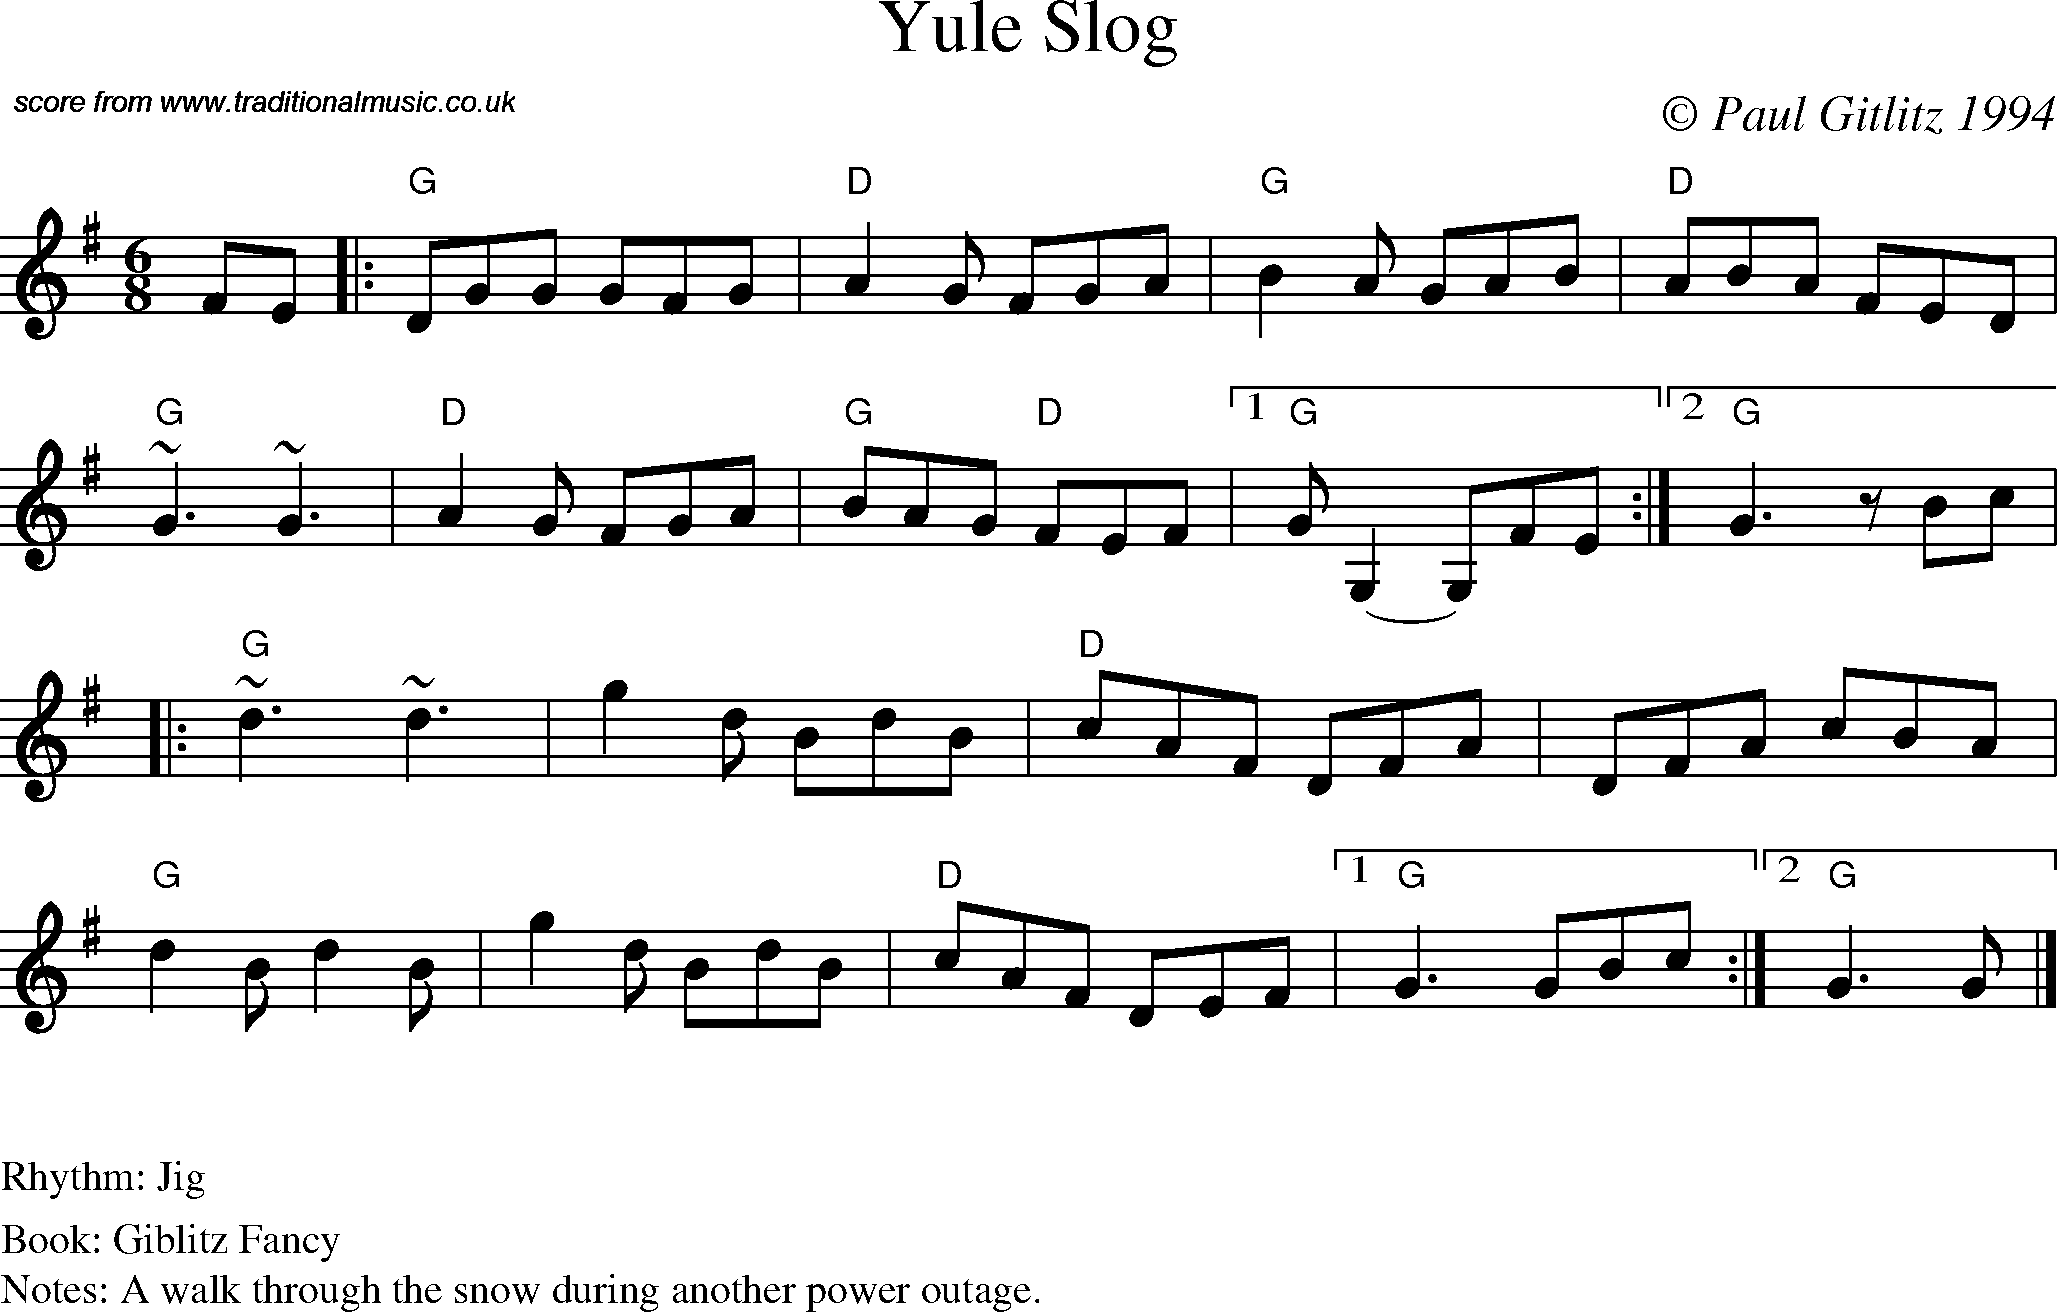 Sheet Music Score for Jig - Yule Slog